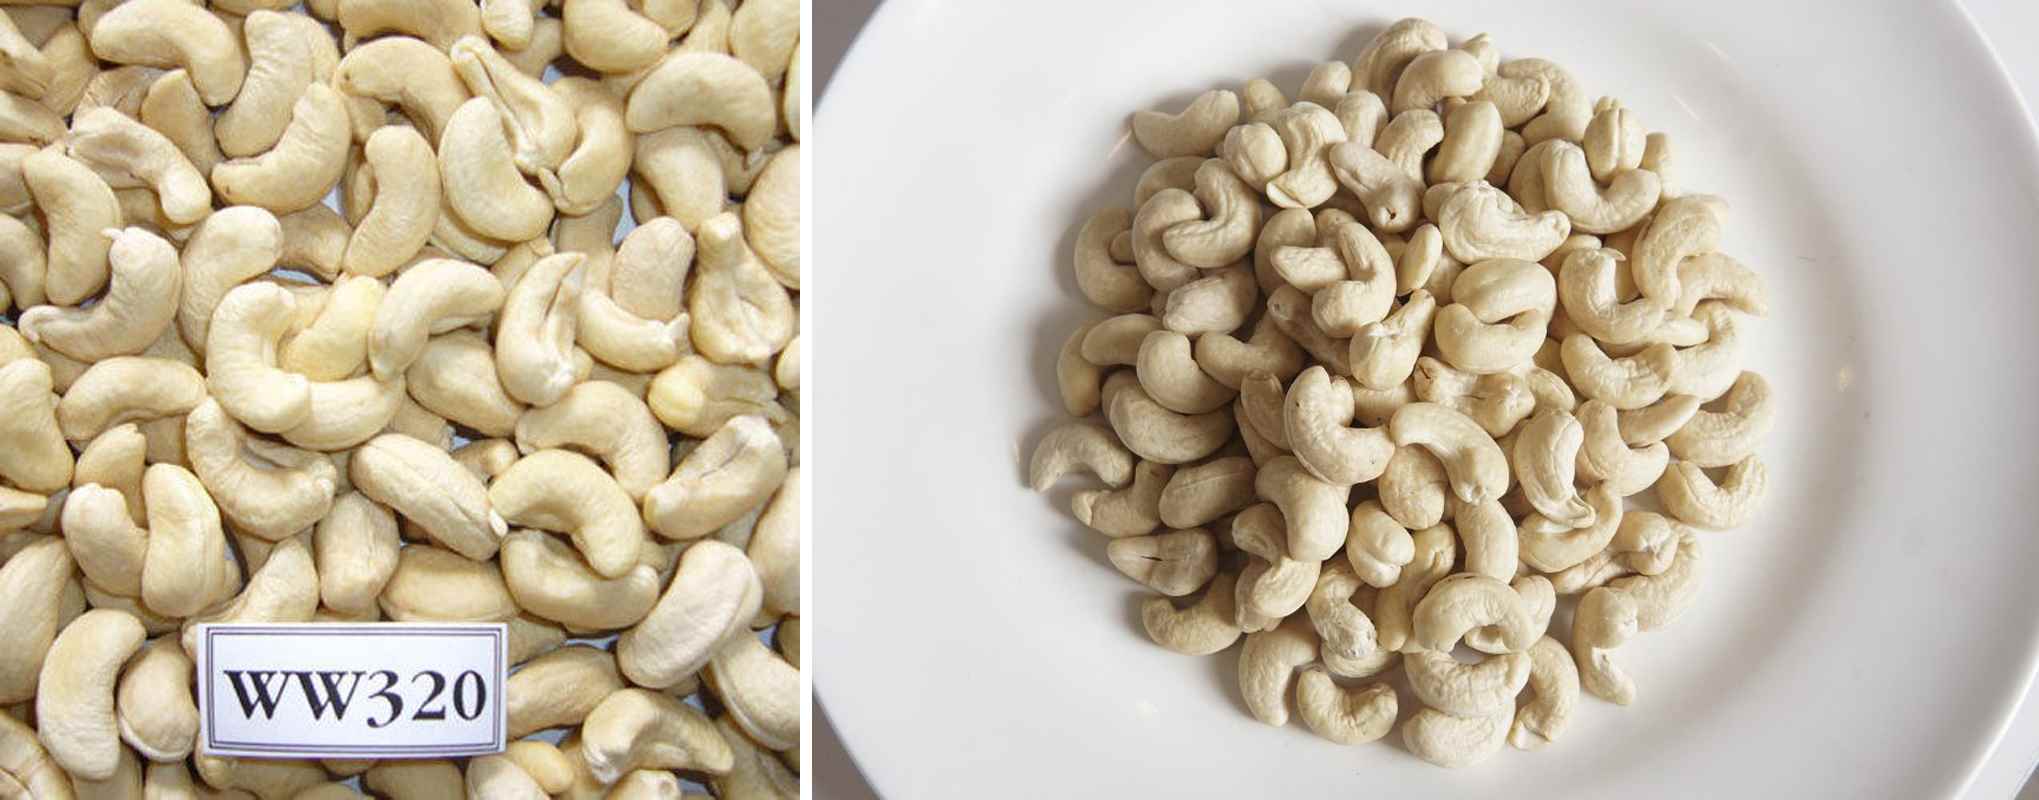 W320 Cashew Whole White  Cashew Nuts Kernel exporter in Vietnam